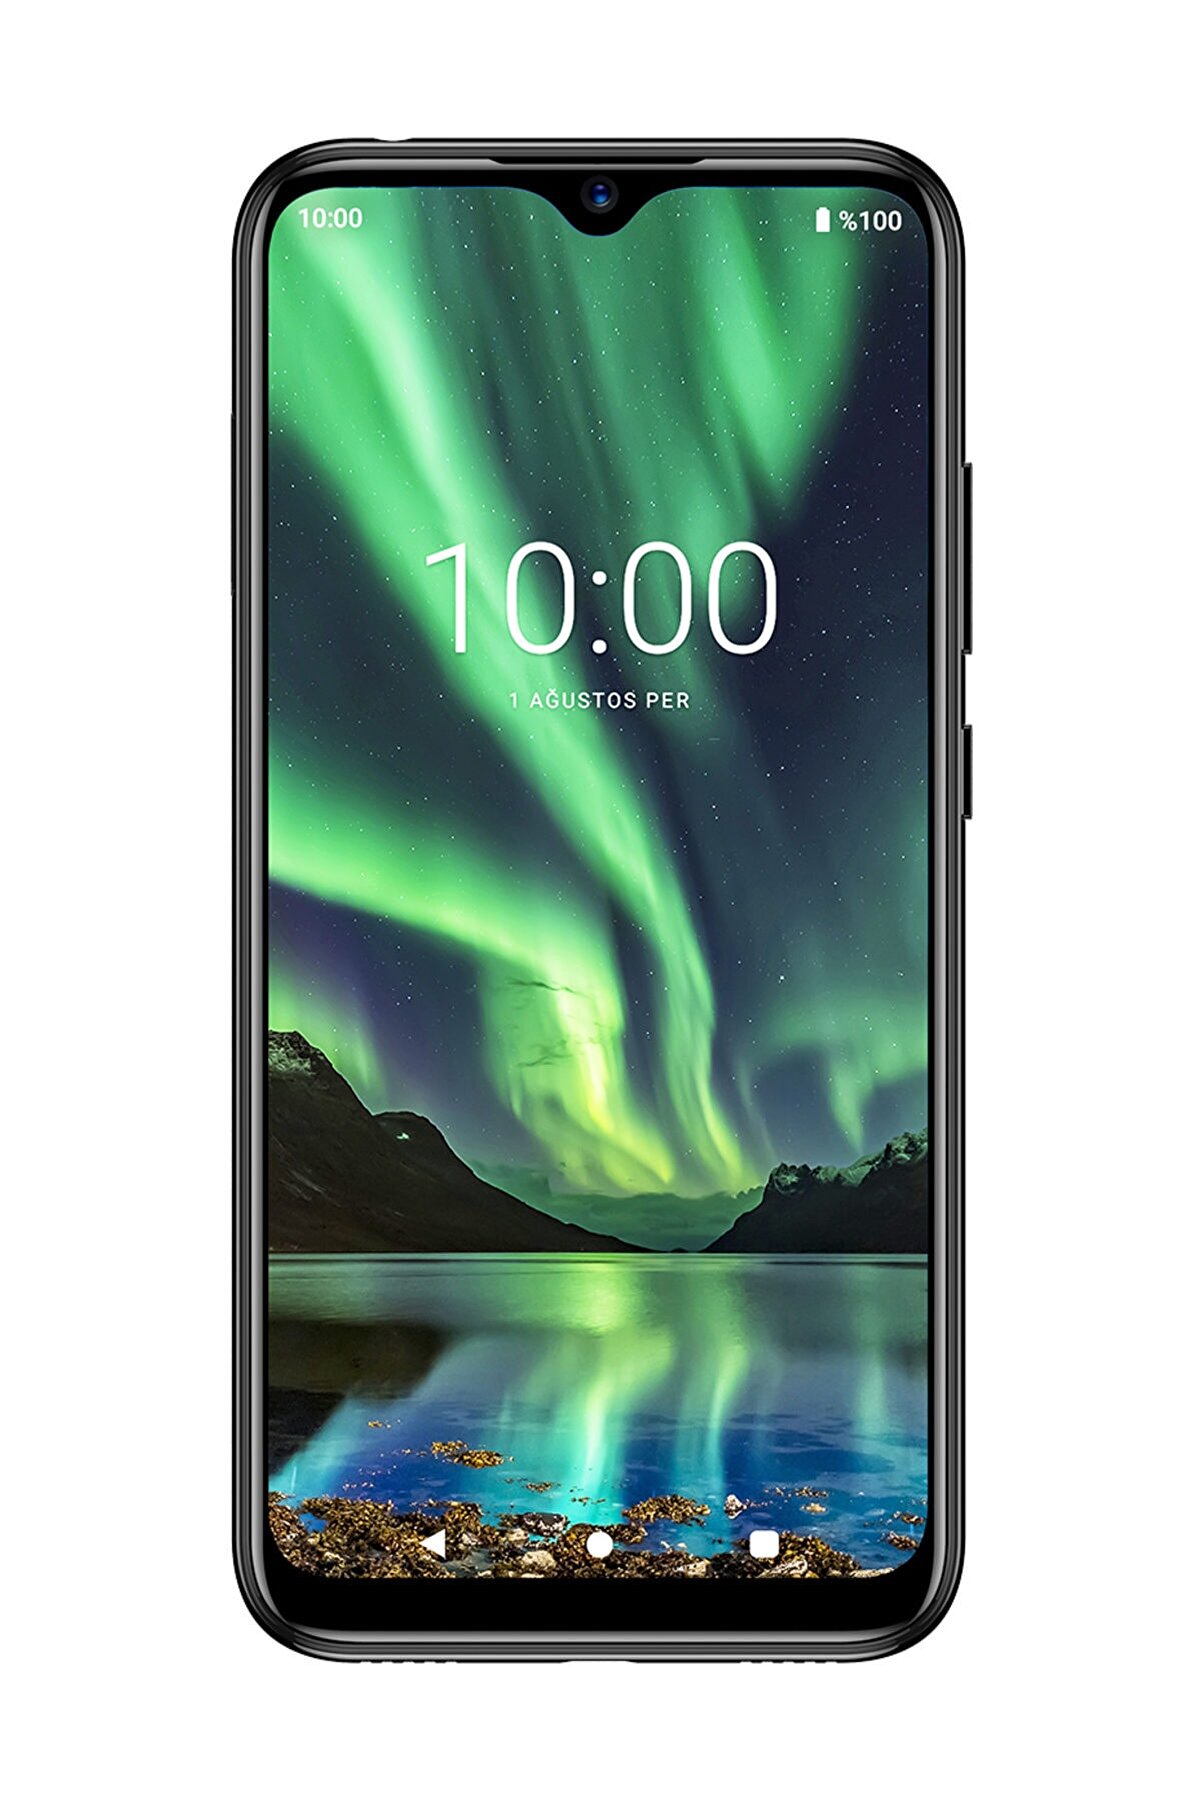 Casper Via S 64 GB Uzay Siyahı Cep Telefonu (2 Yıl Casper Türkiye Garantili)